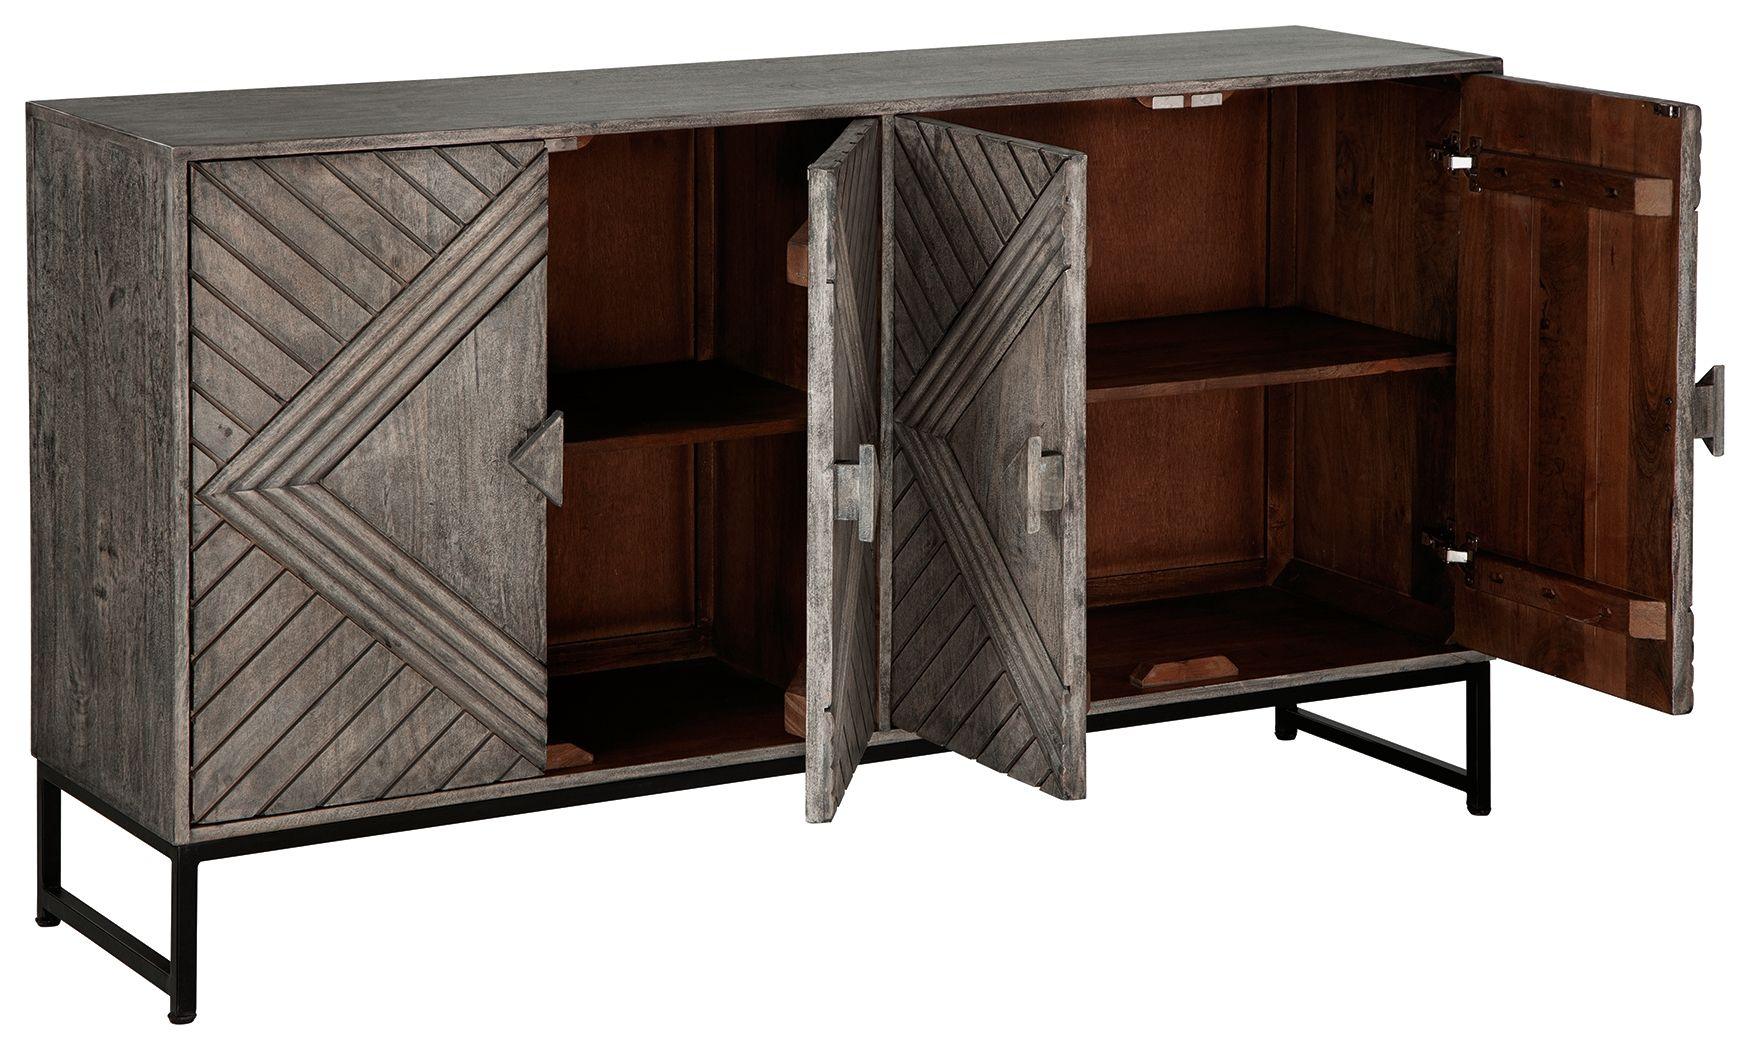 Ashley Furniture - Treybrook - Accent Cabinet - 5th Avenue Furniture